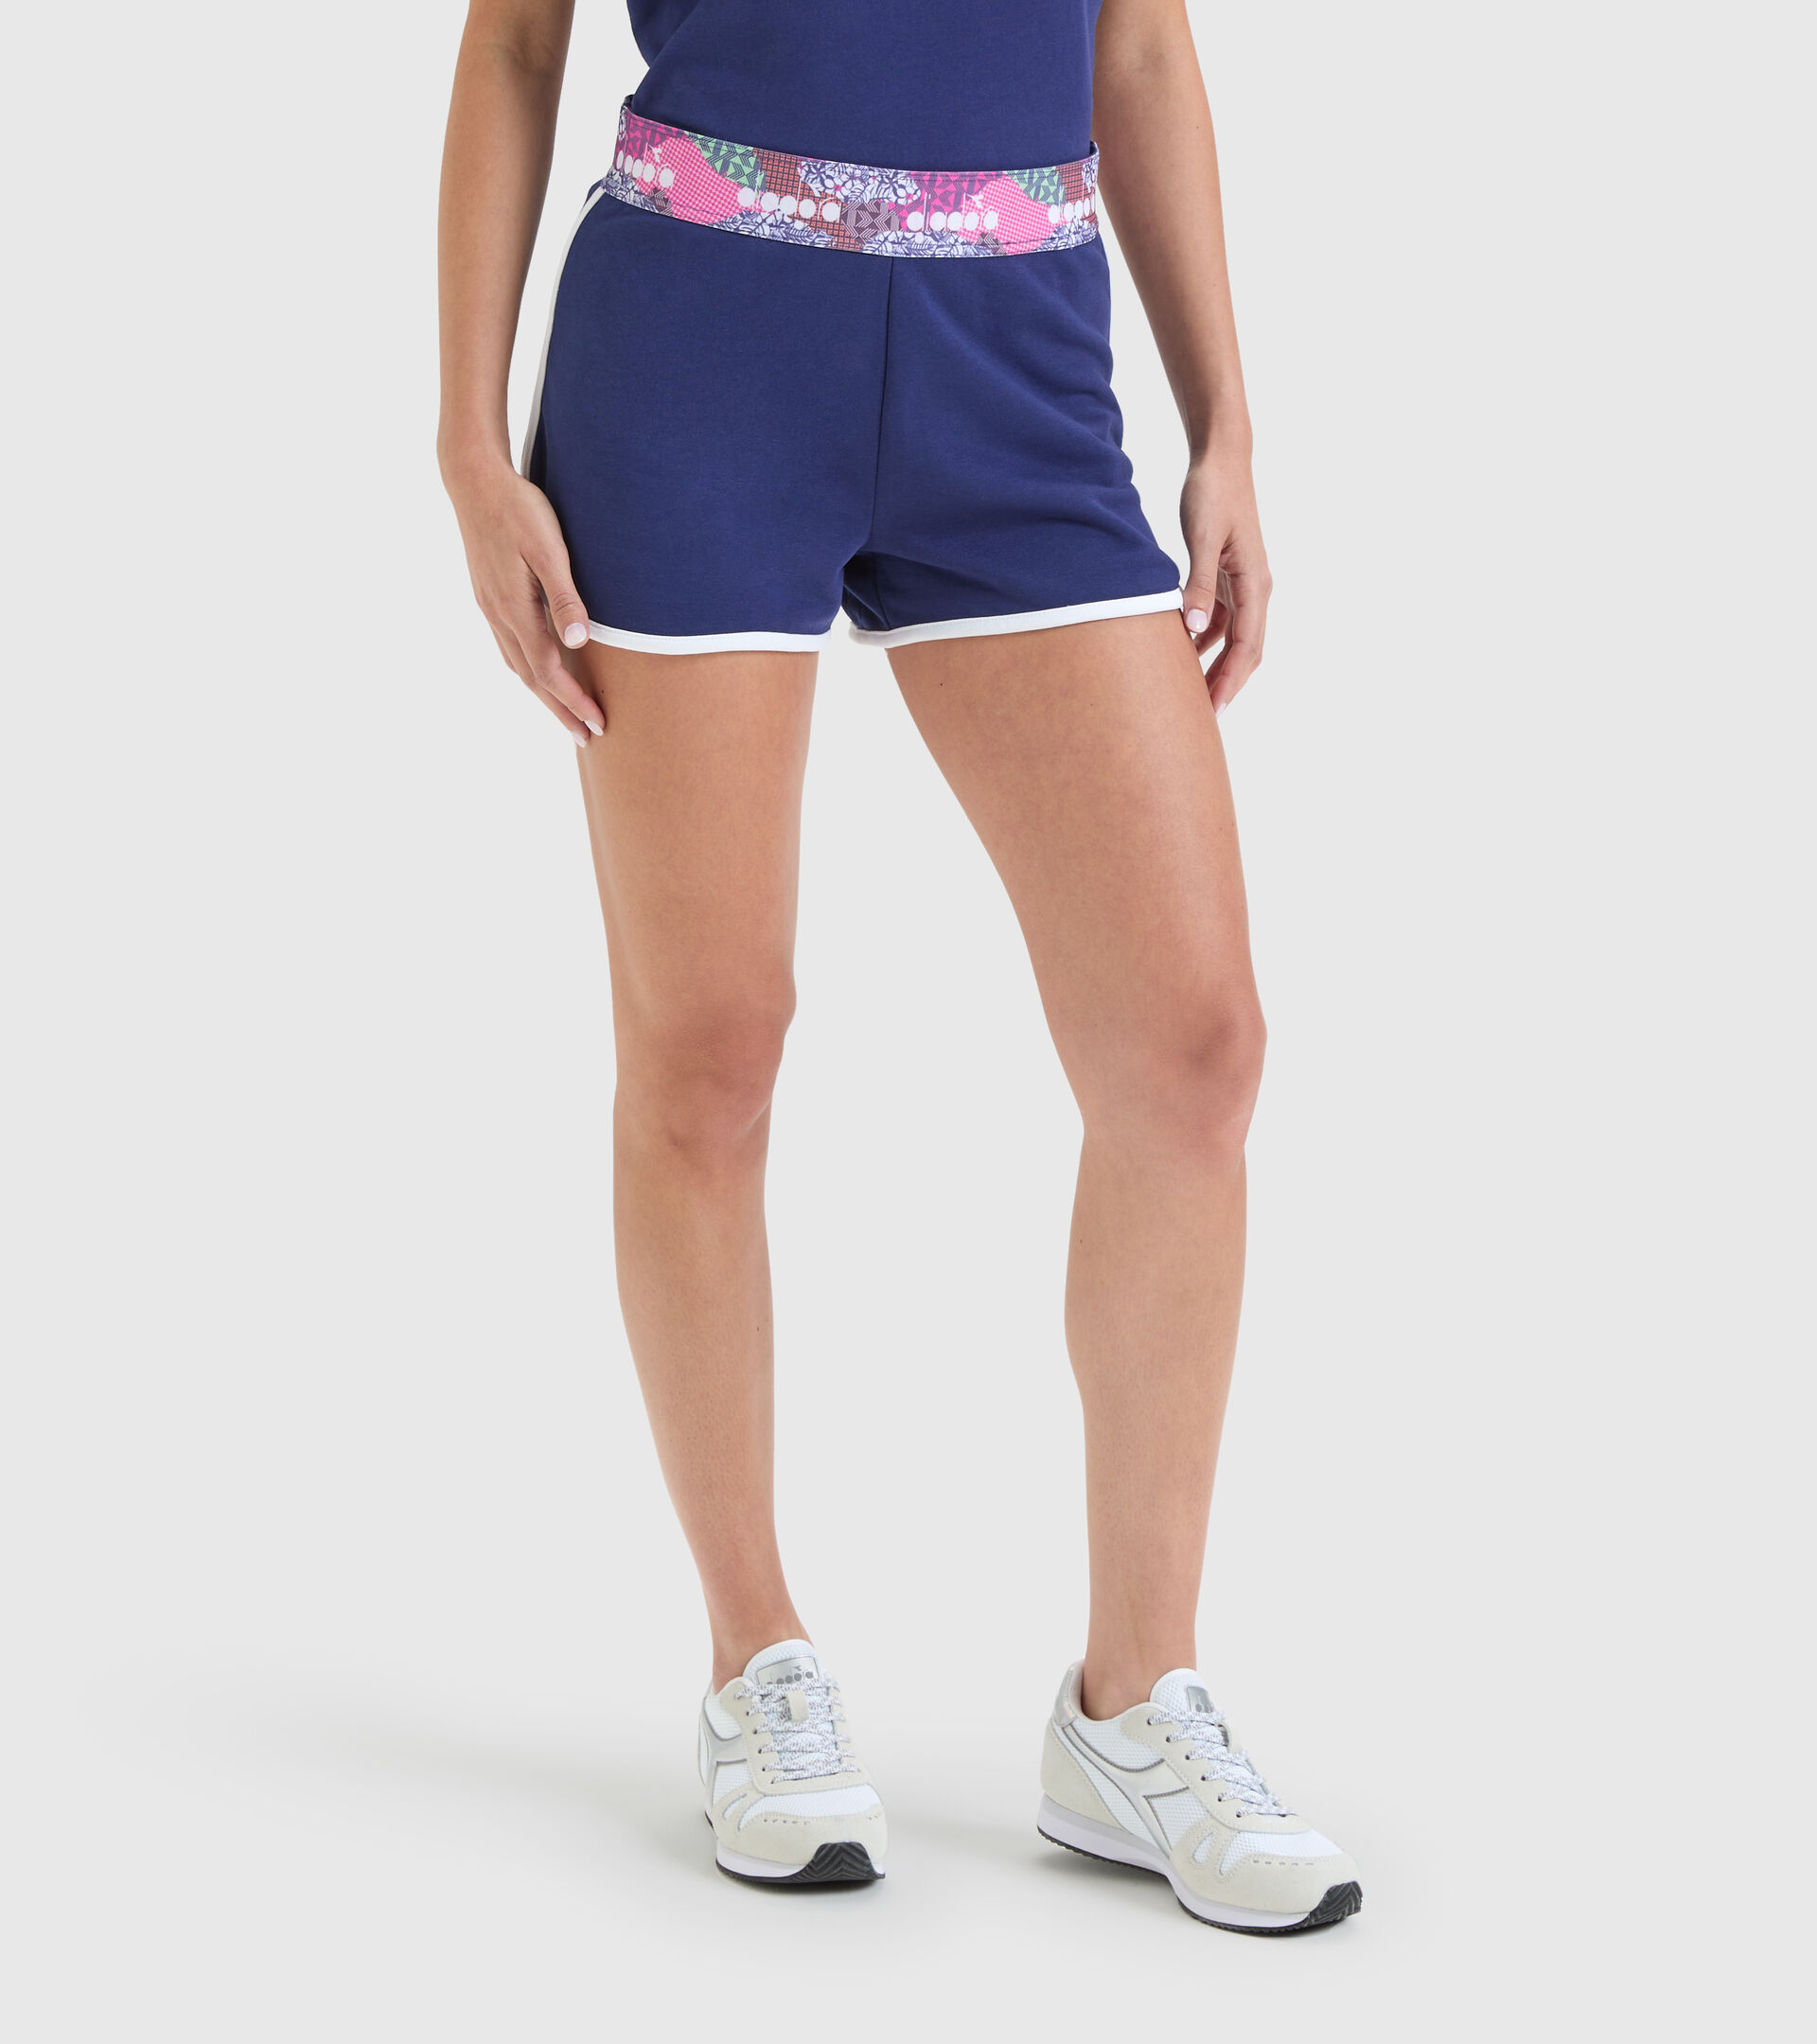 Omtrek Shetland Analist L. SHORT FLOSS Cotton sports shorts - Women - Diadora Online Store US